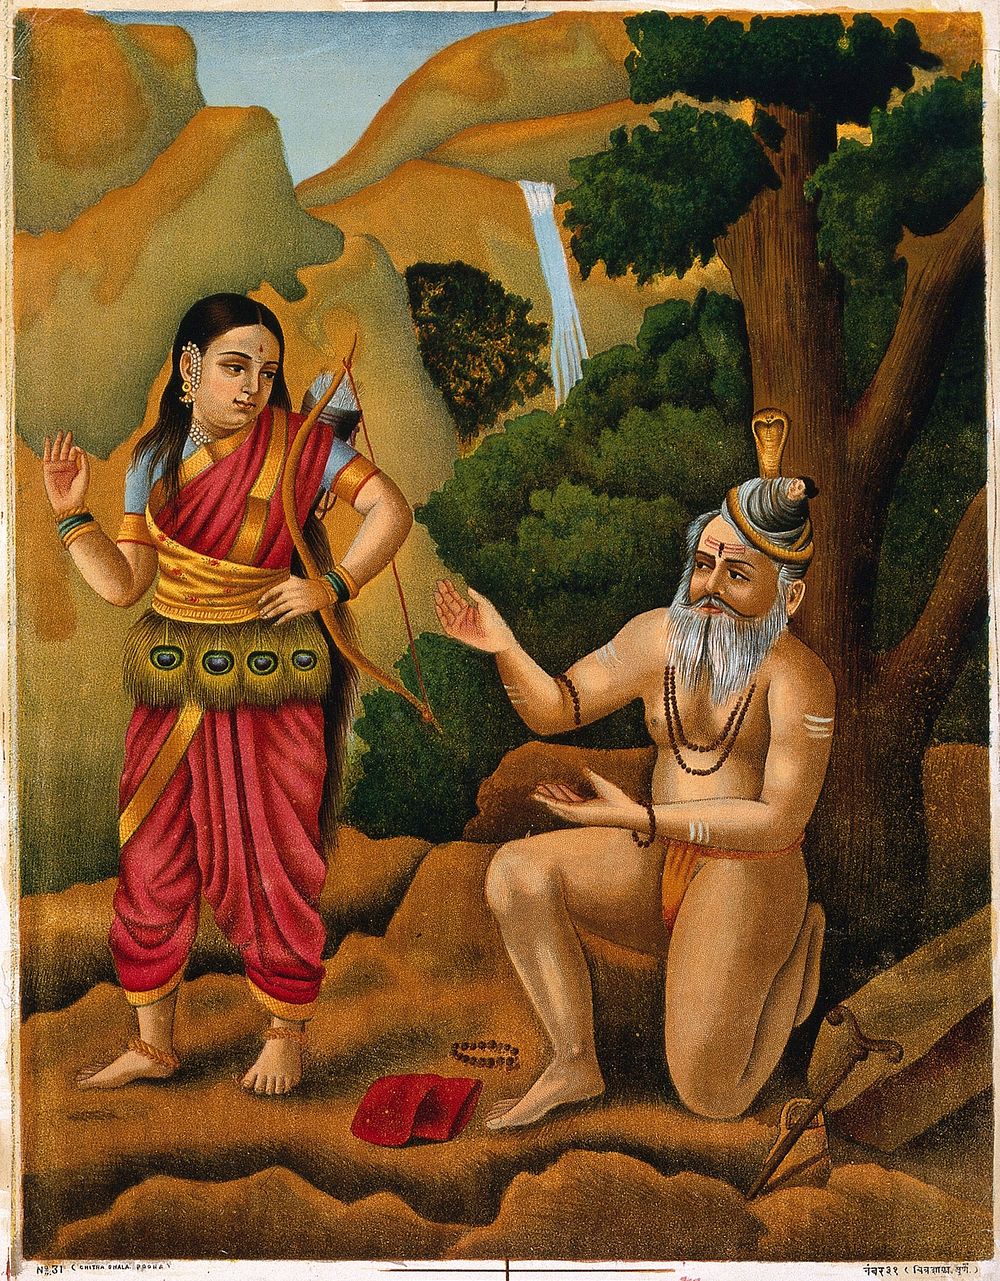 A huntress coming across Shiva as a yogi. Chromolithograph.